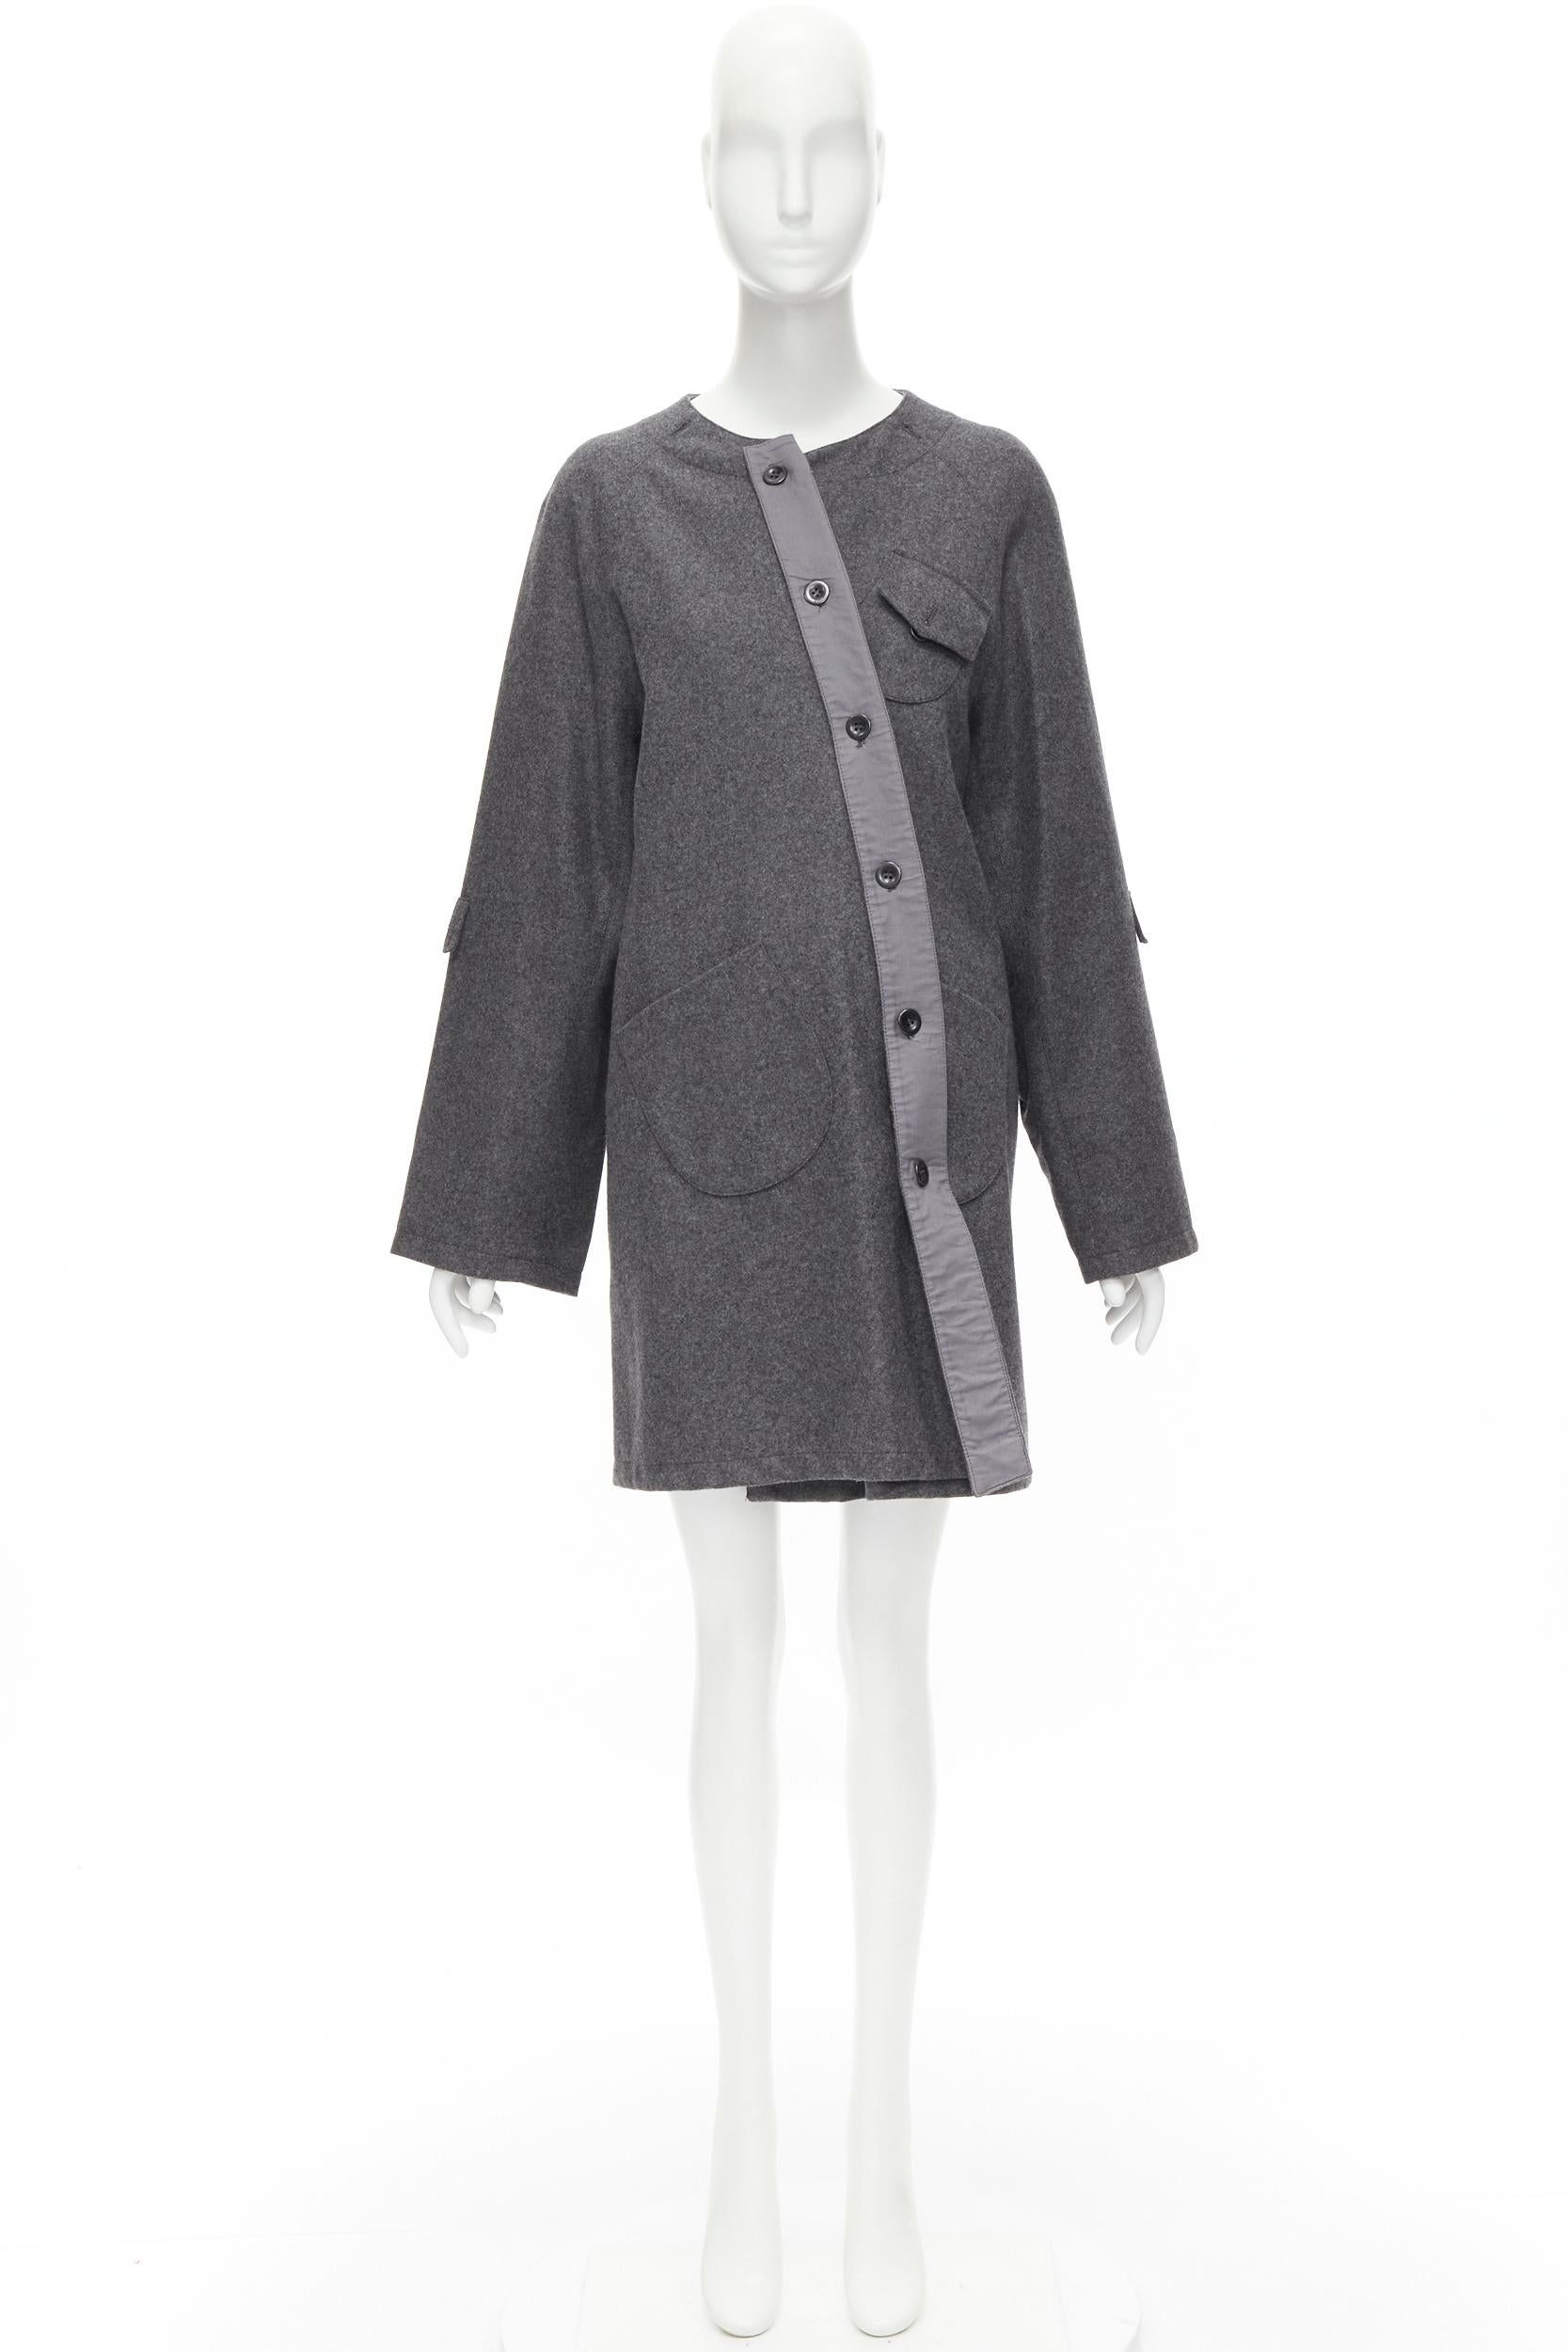 MIU MIU grey cashmere wool blend asymmetric button boxy coat IT38 XS For Sale 6